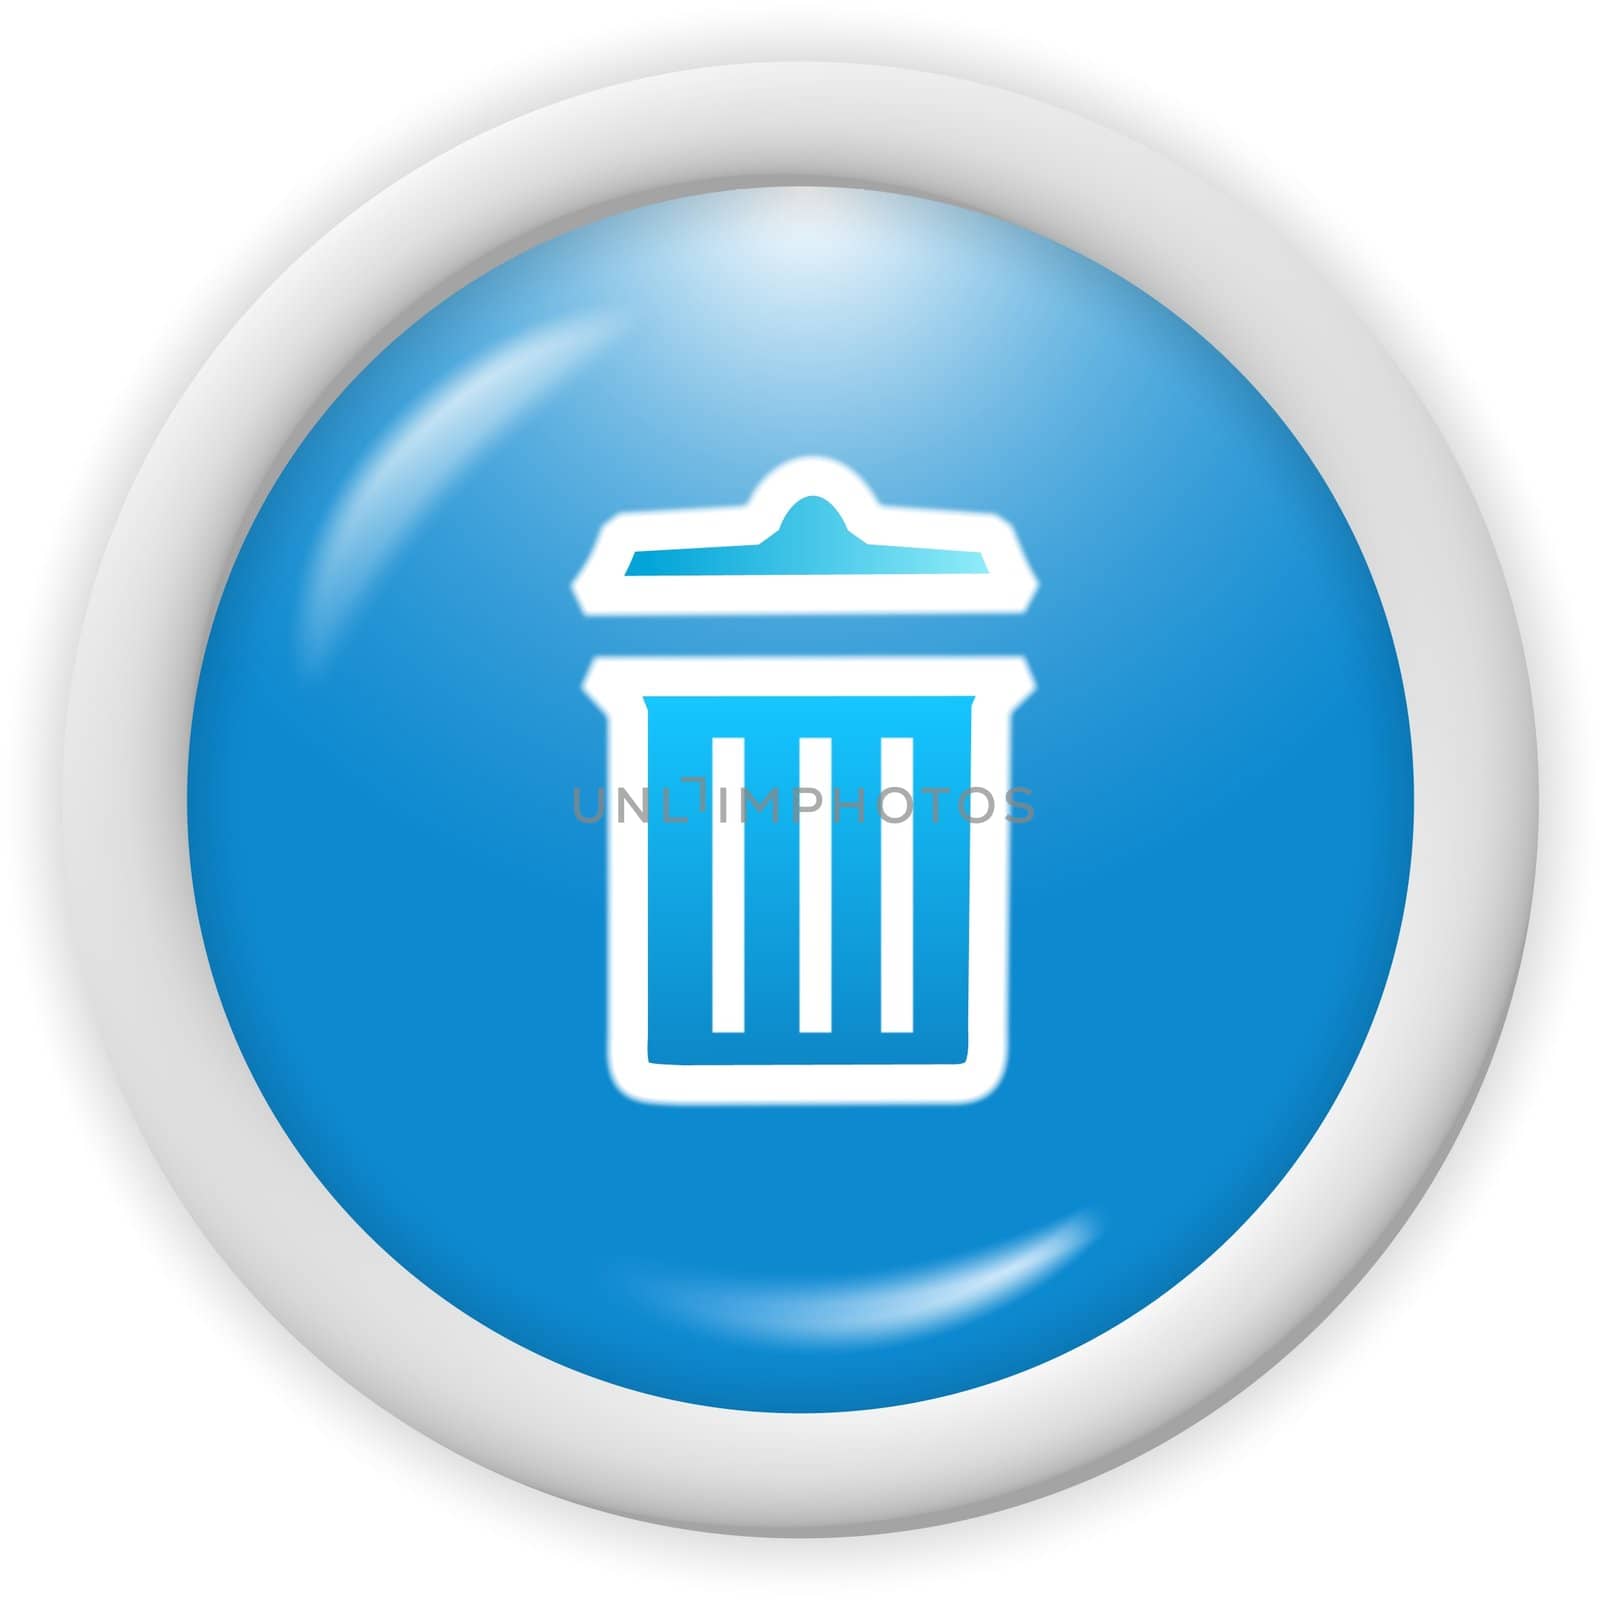 3d blue icon symbol - web design graphics